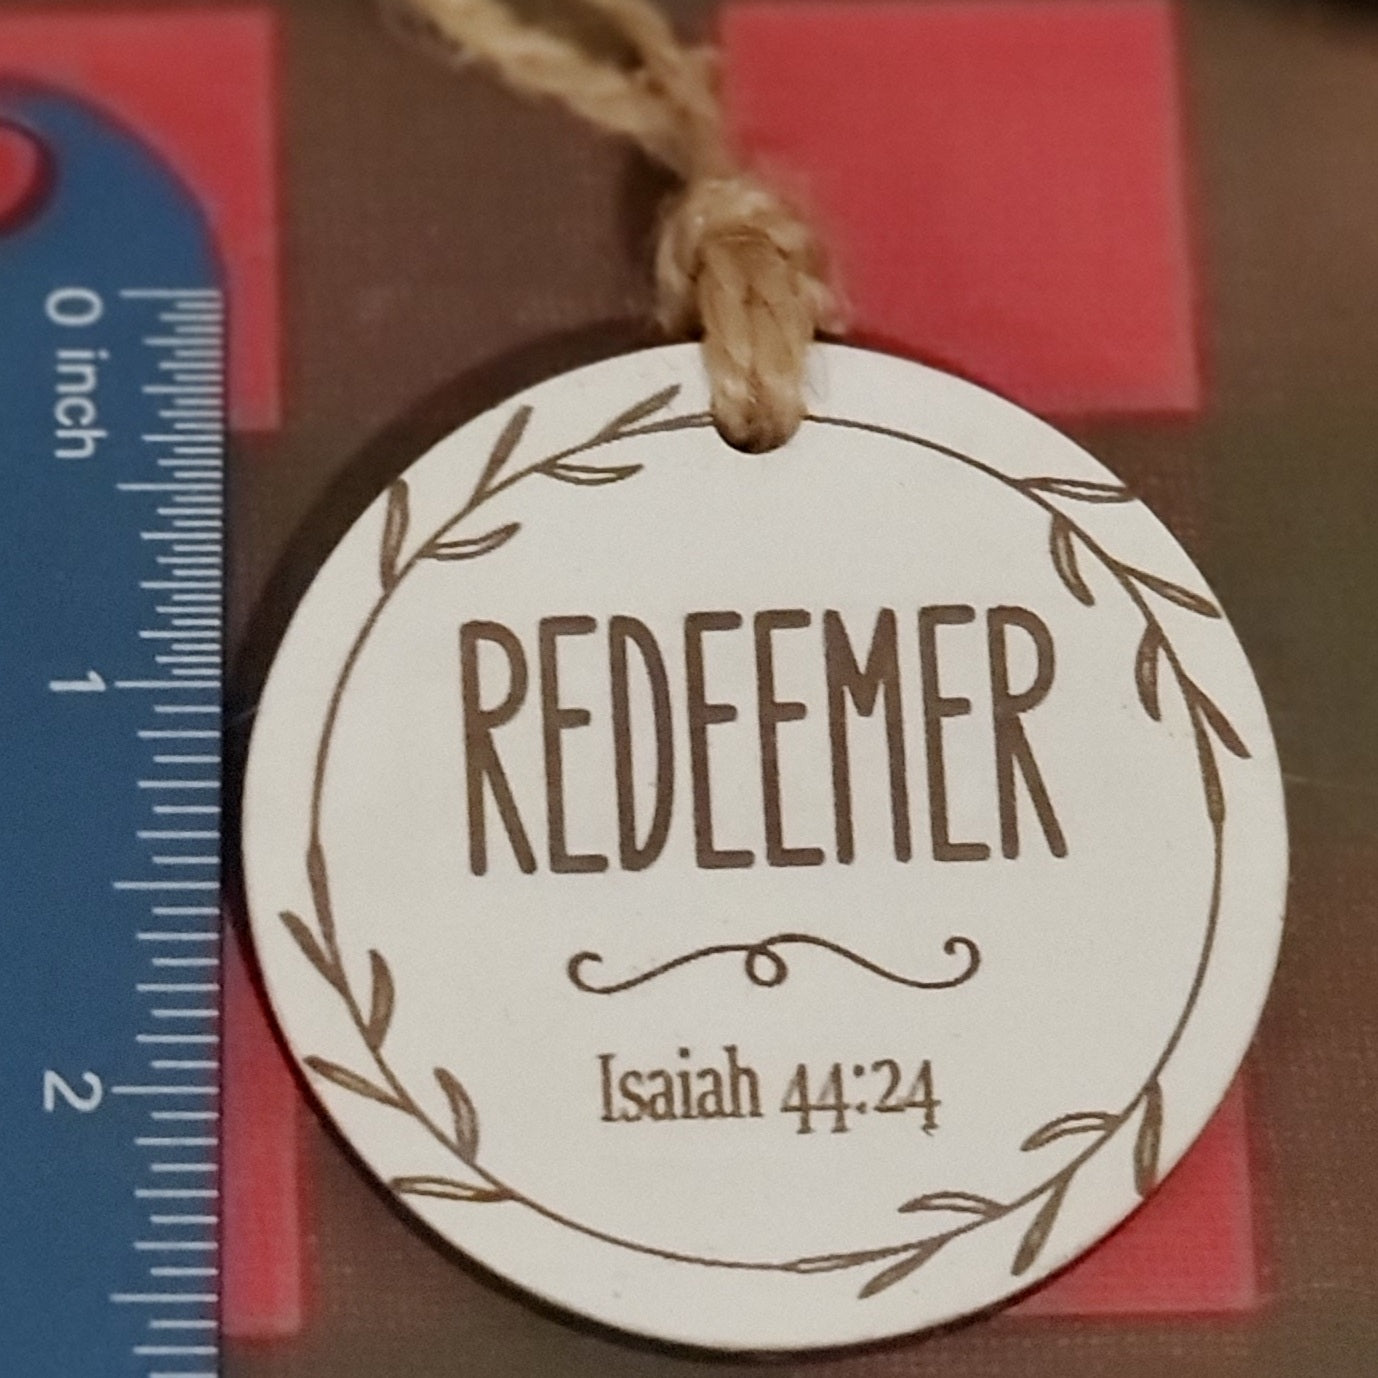 Christ Name Scripture Ornaments